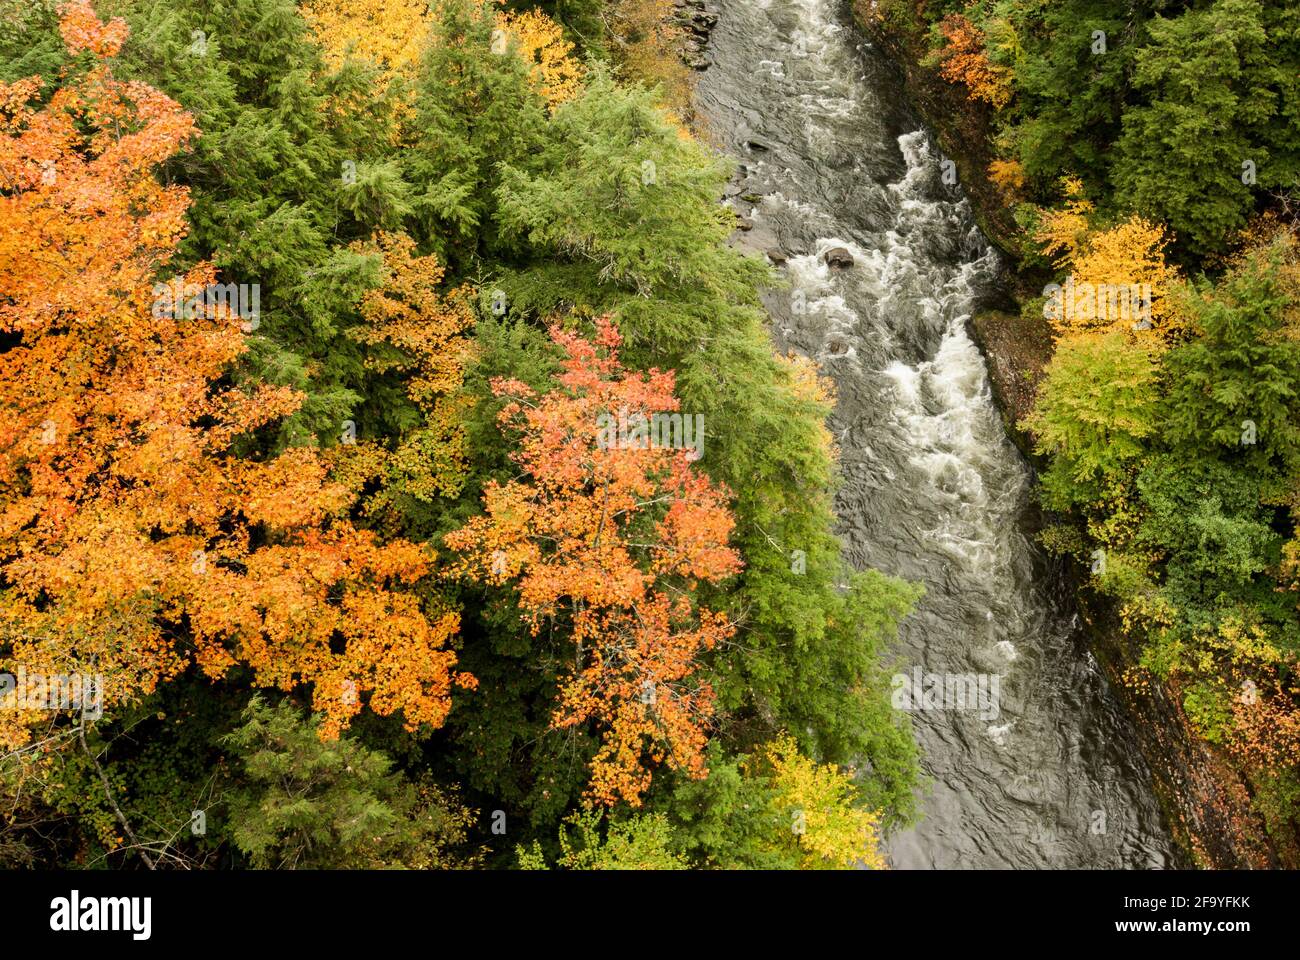 The Ottauquechee River running through Quechee Gorge, Vermont, USA in autumn / fall. Stock Photo